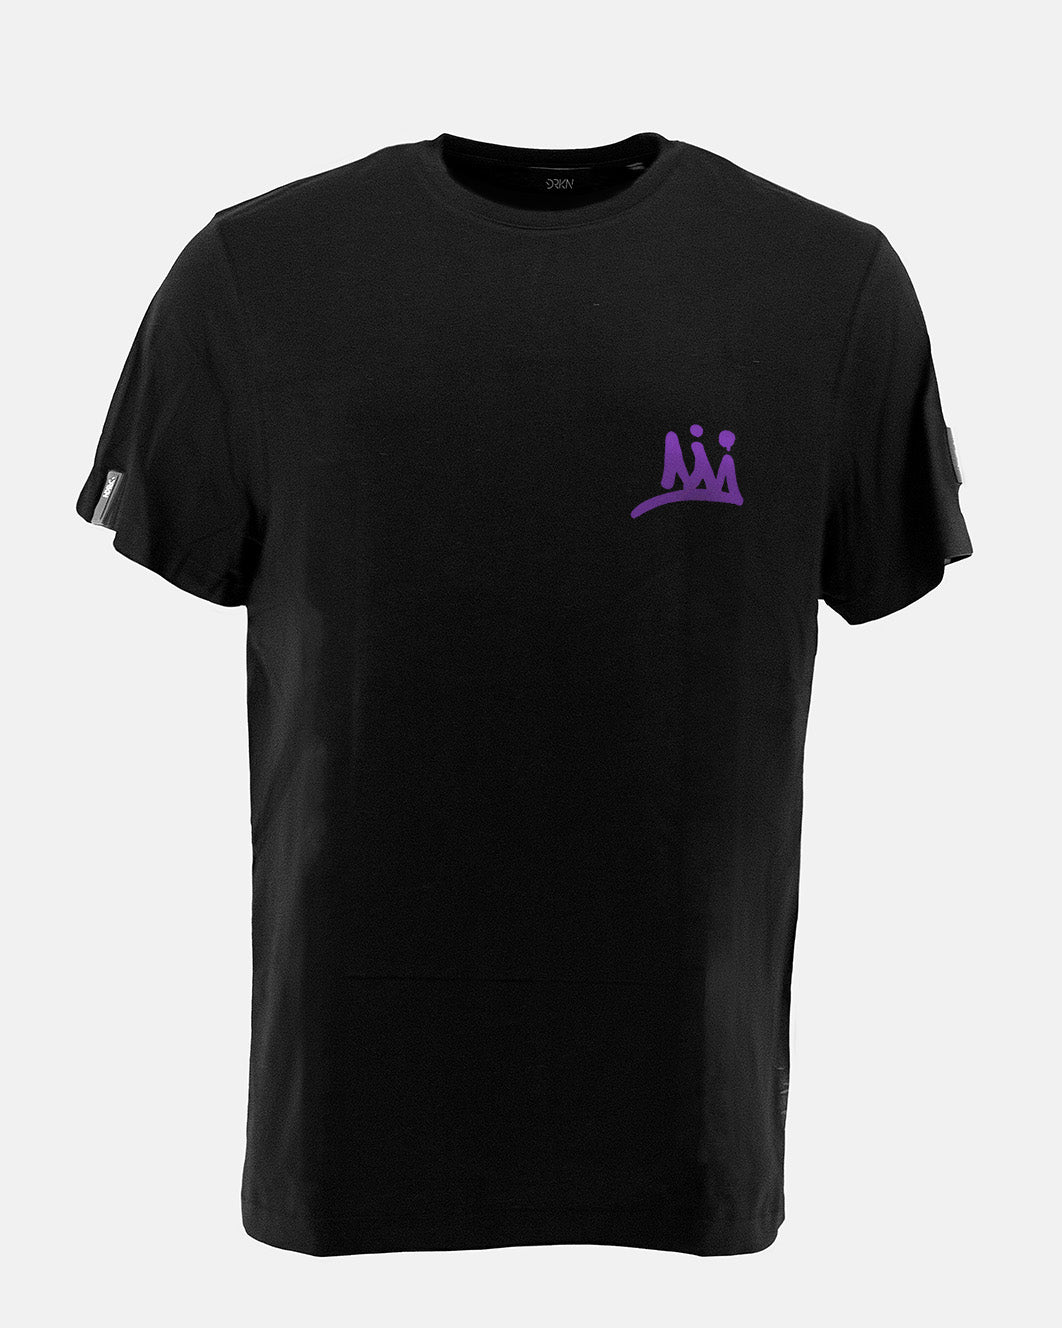 The Official PGC 2022 Black T-Shirt